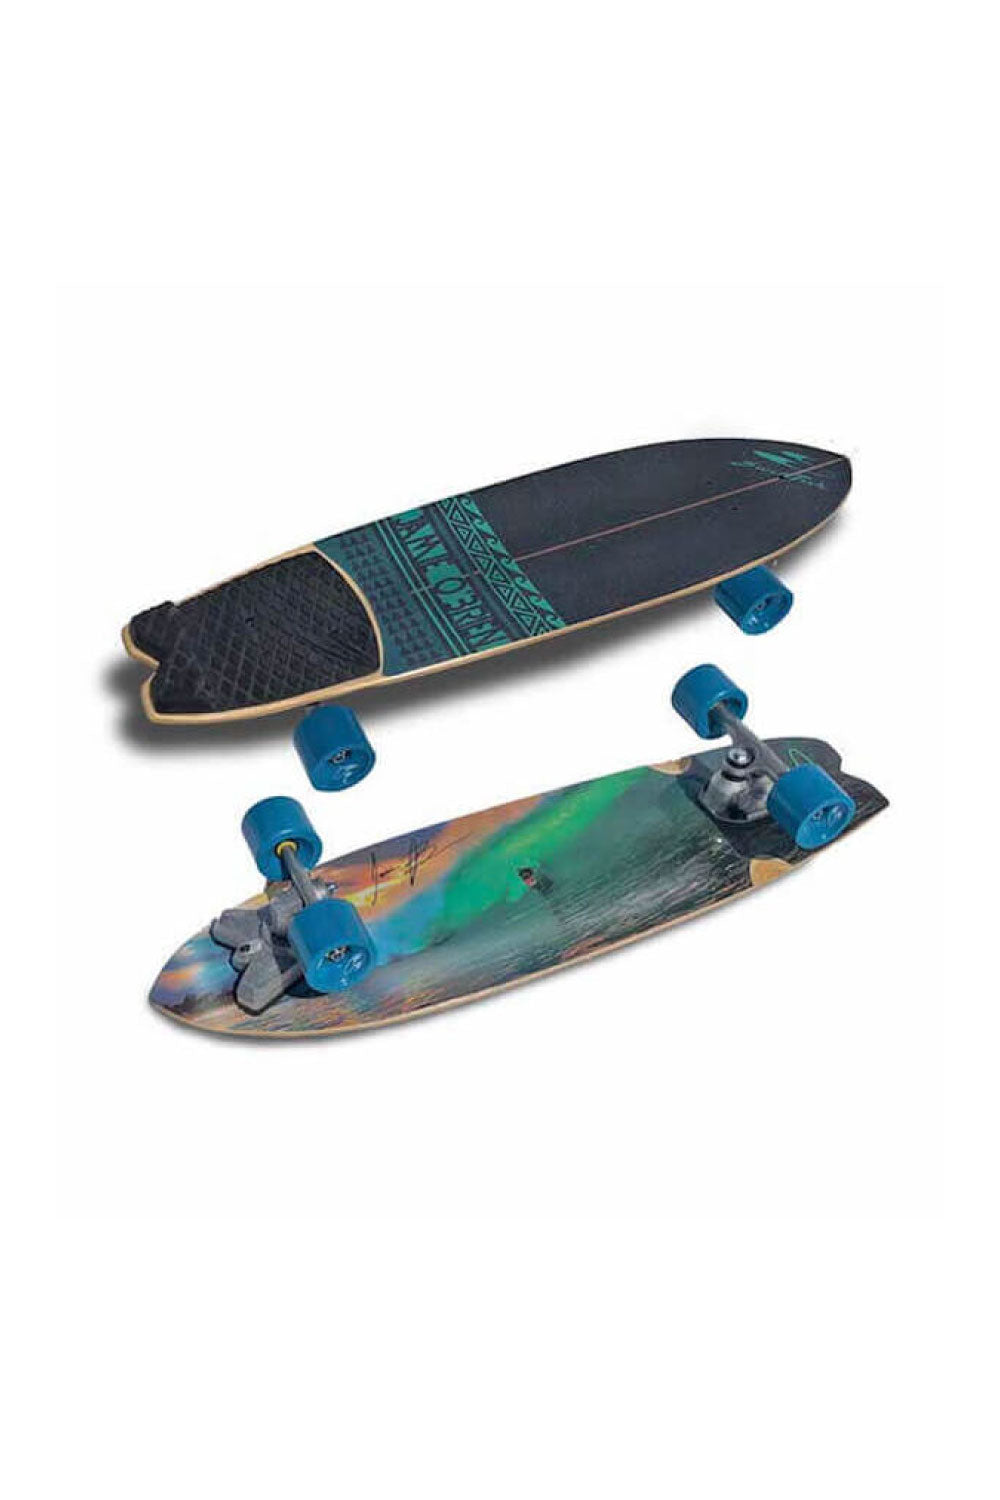 Swelltech Surf Skate Jamie O'Brien Pipeline Complete SKateboard